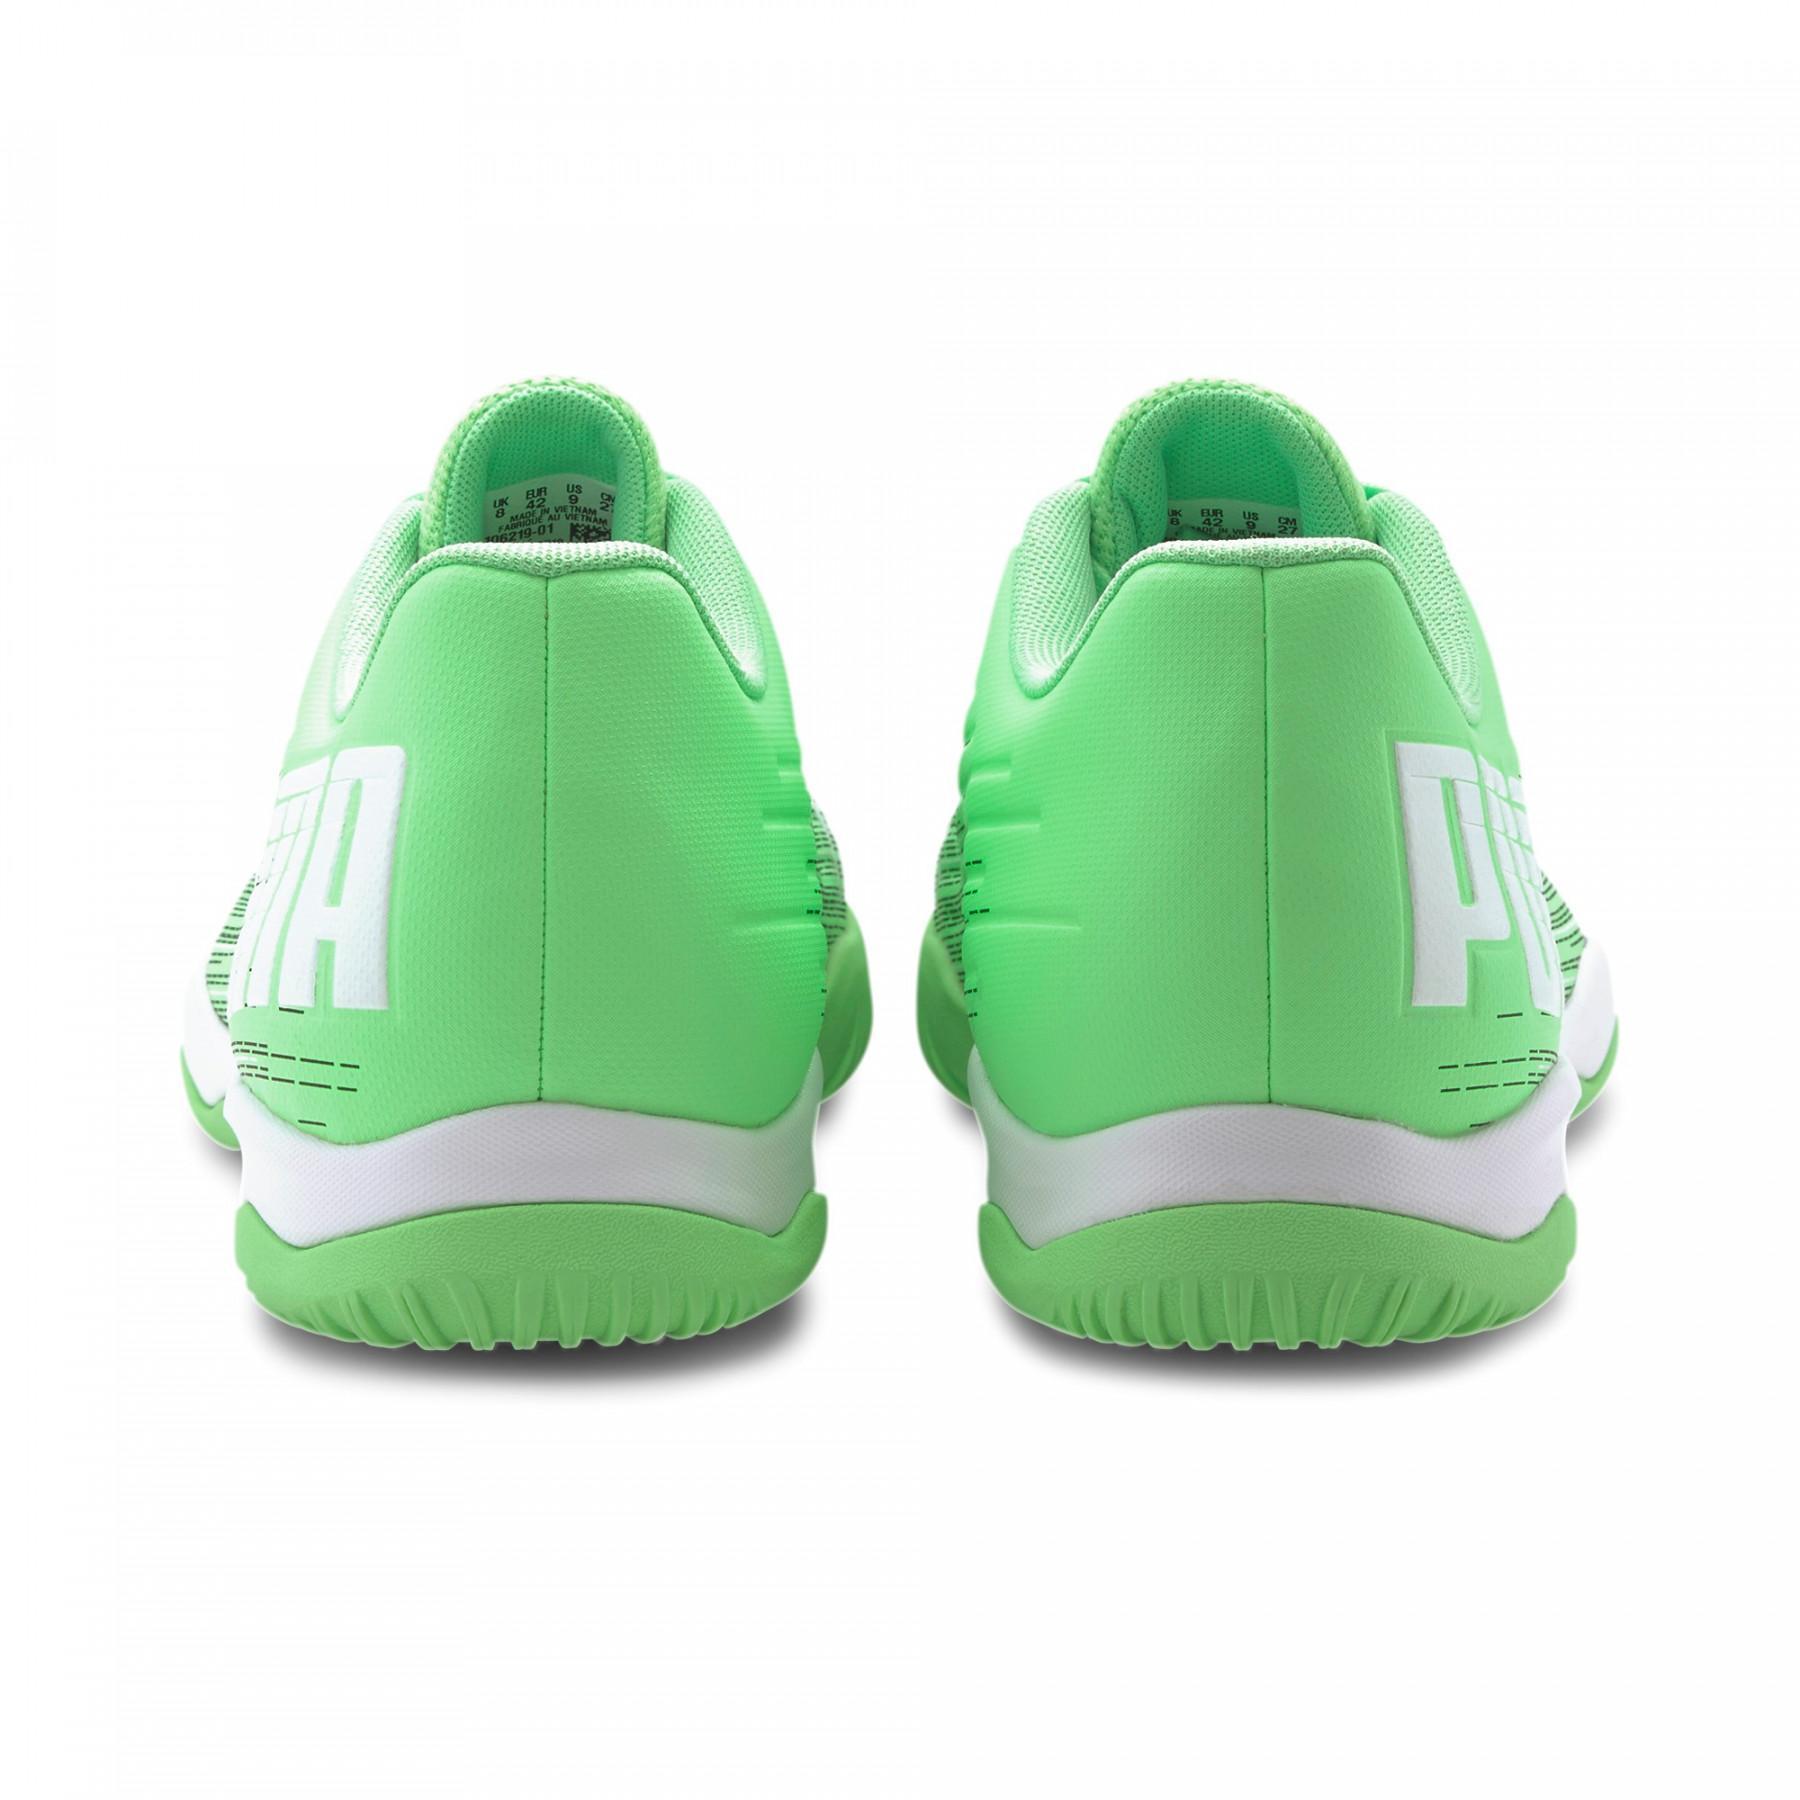 Zapatos Puma Adrenalite 4.1